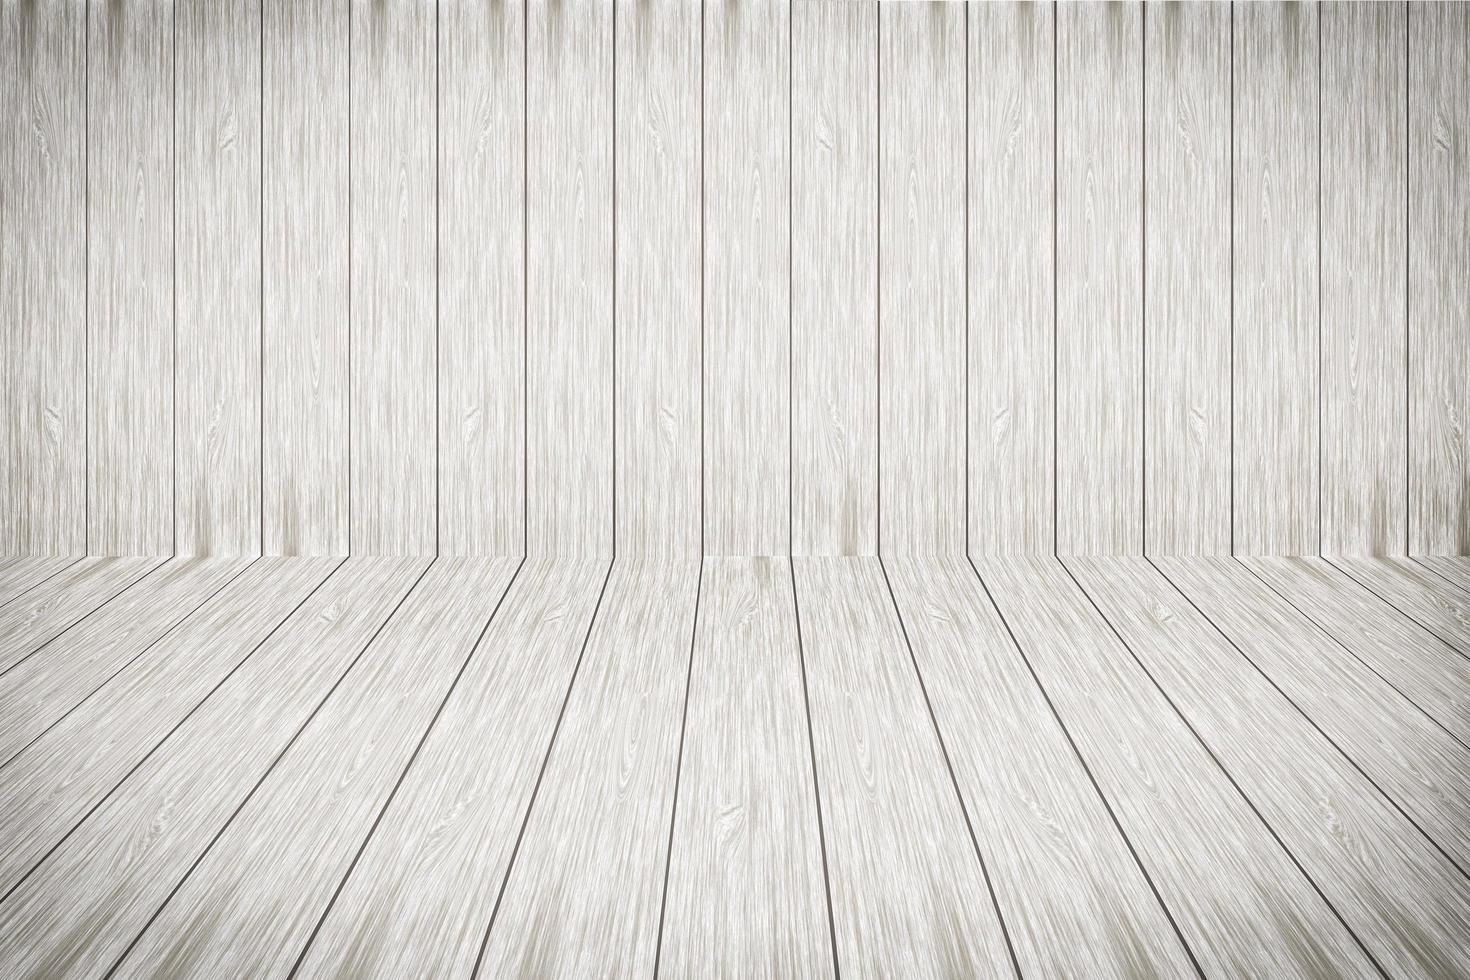 fondos de textura de madera blanca foto